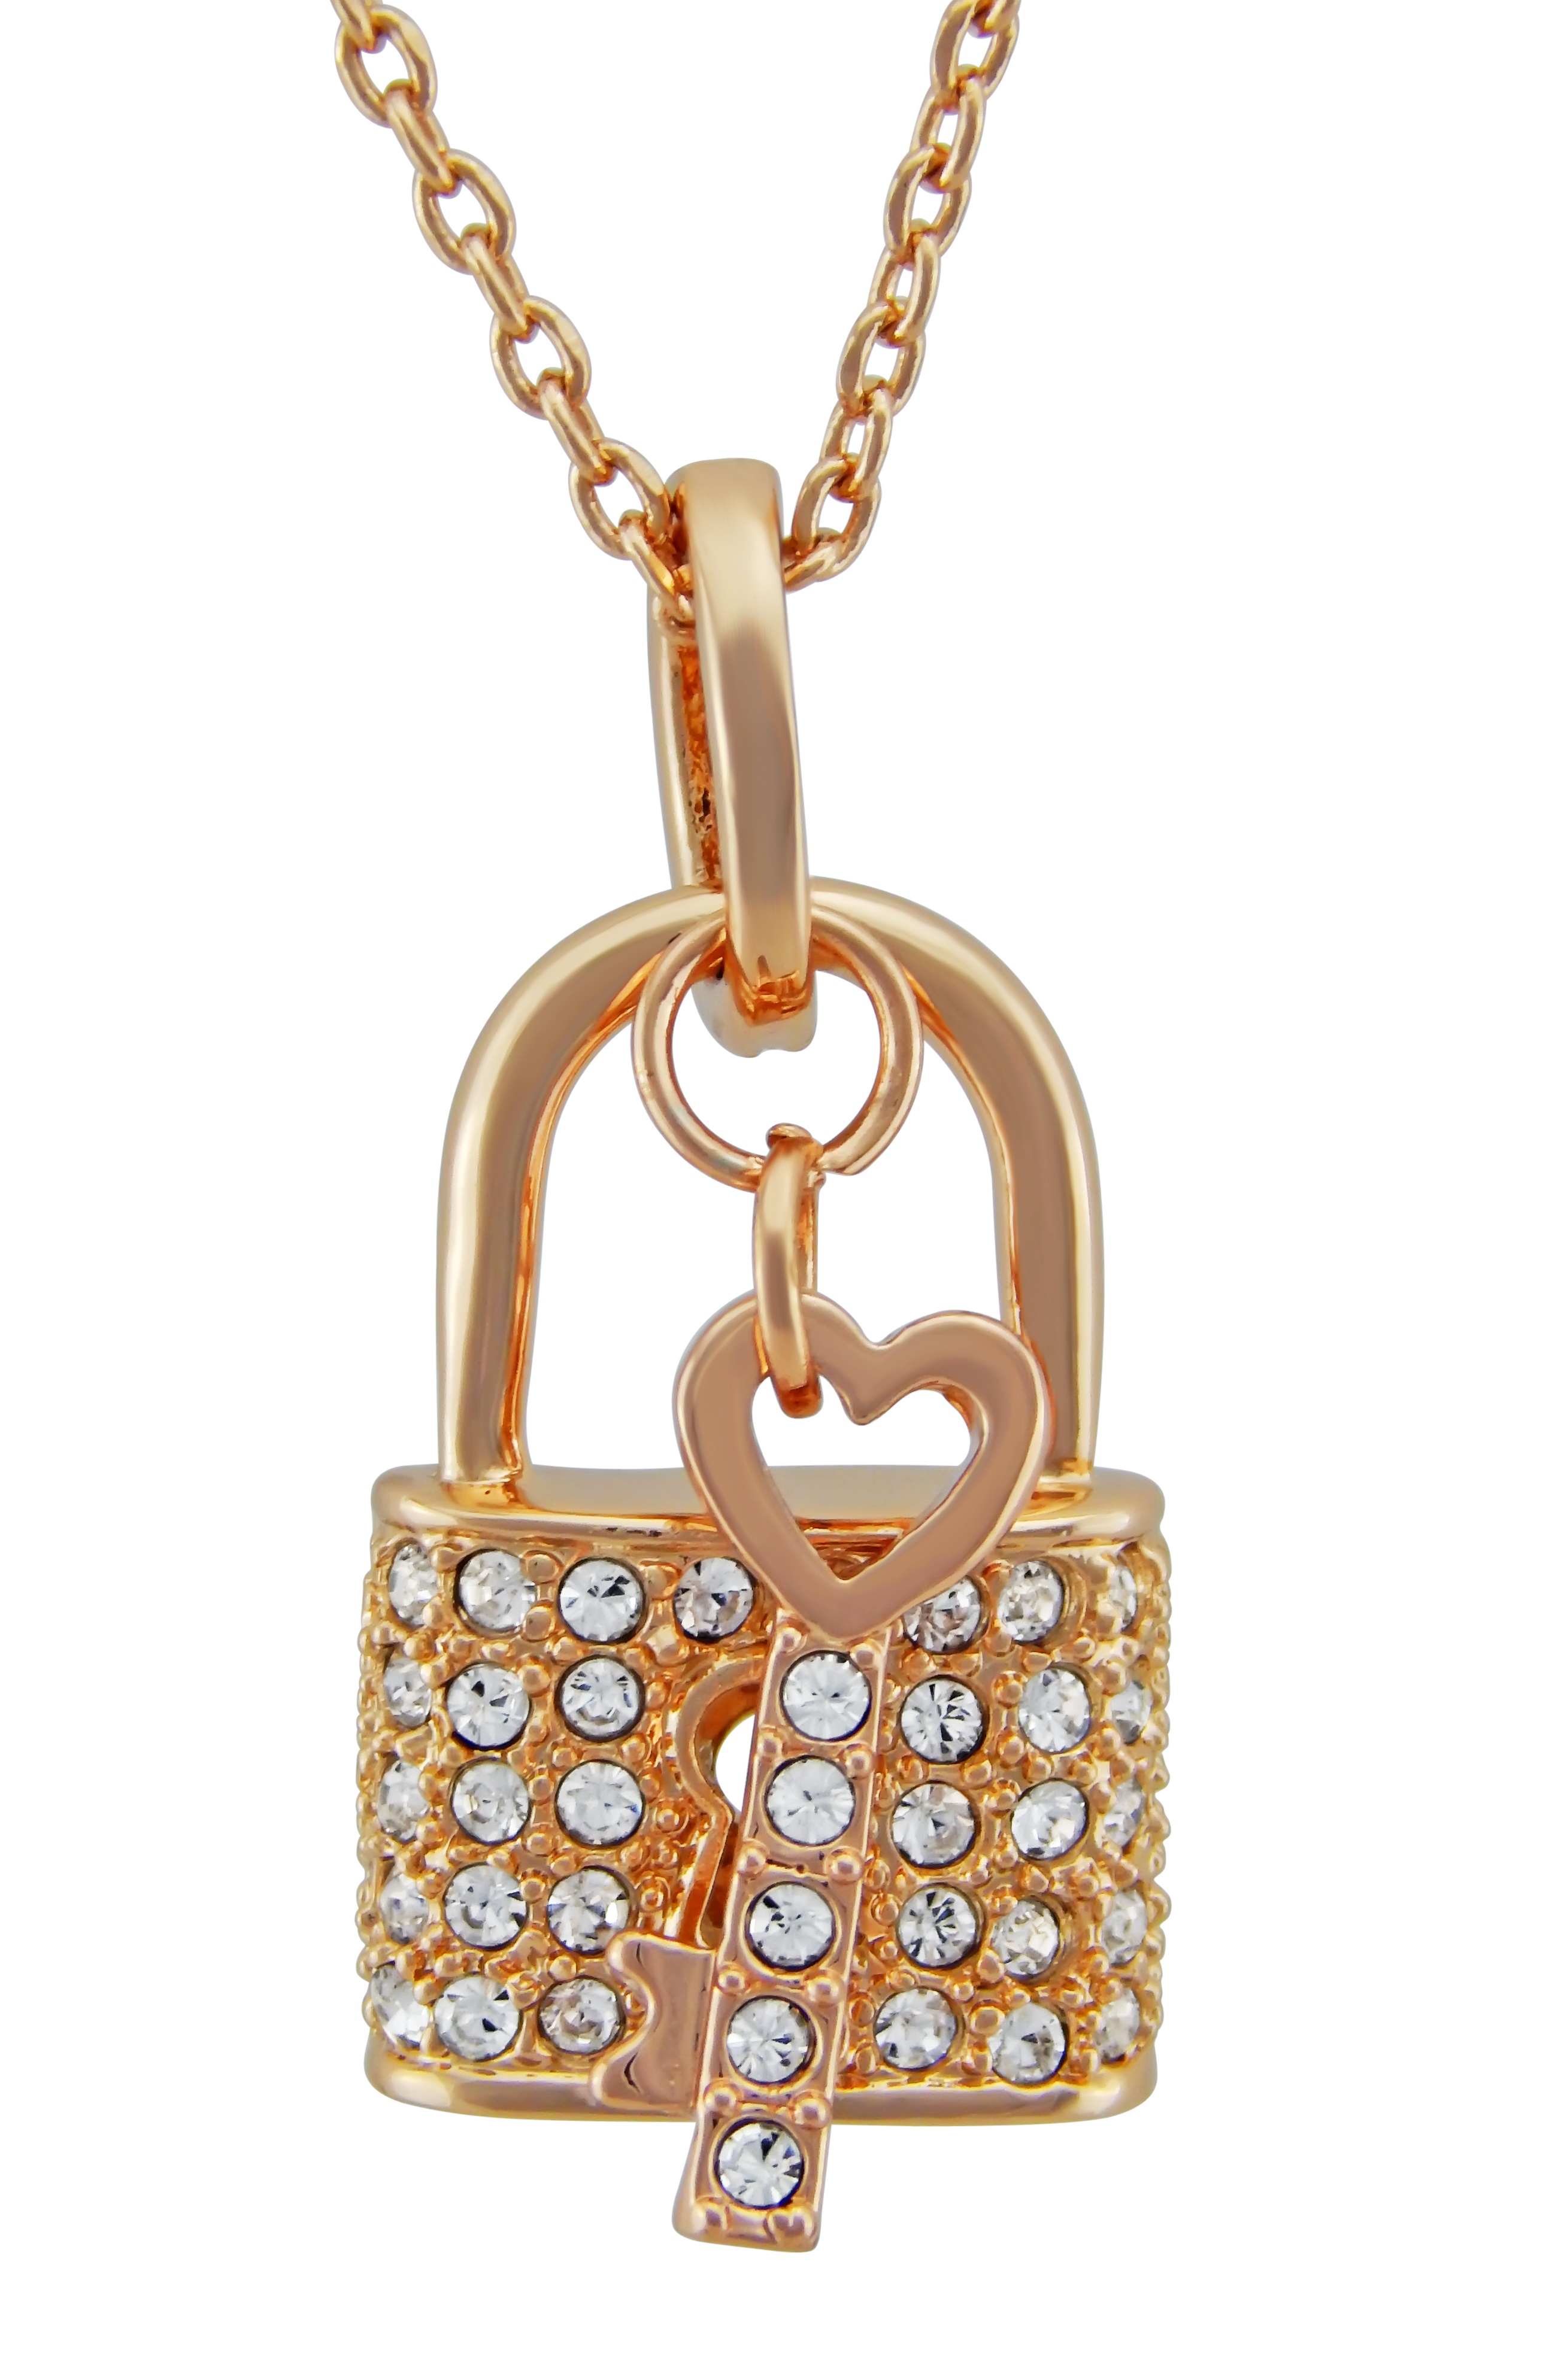 women&#39;s jewelry Necklace Gold plated Key to Heart Lock Love rhinestones | eBay